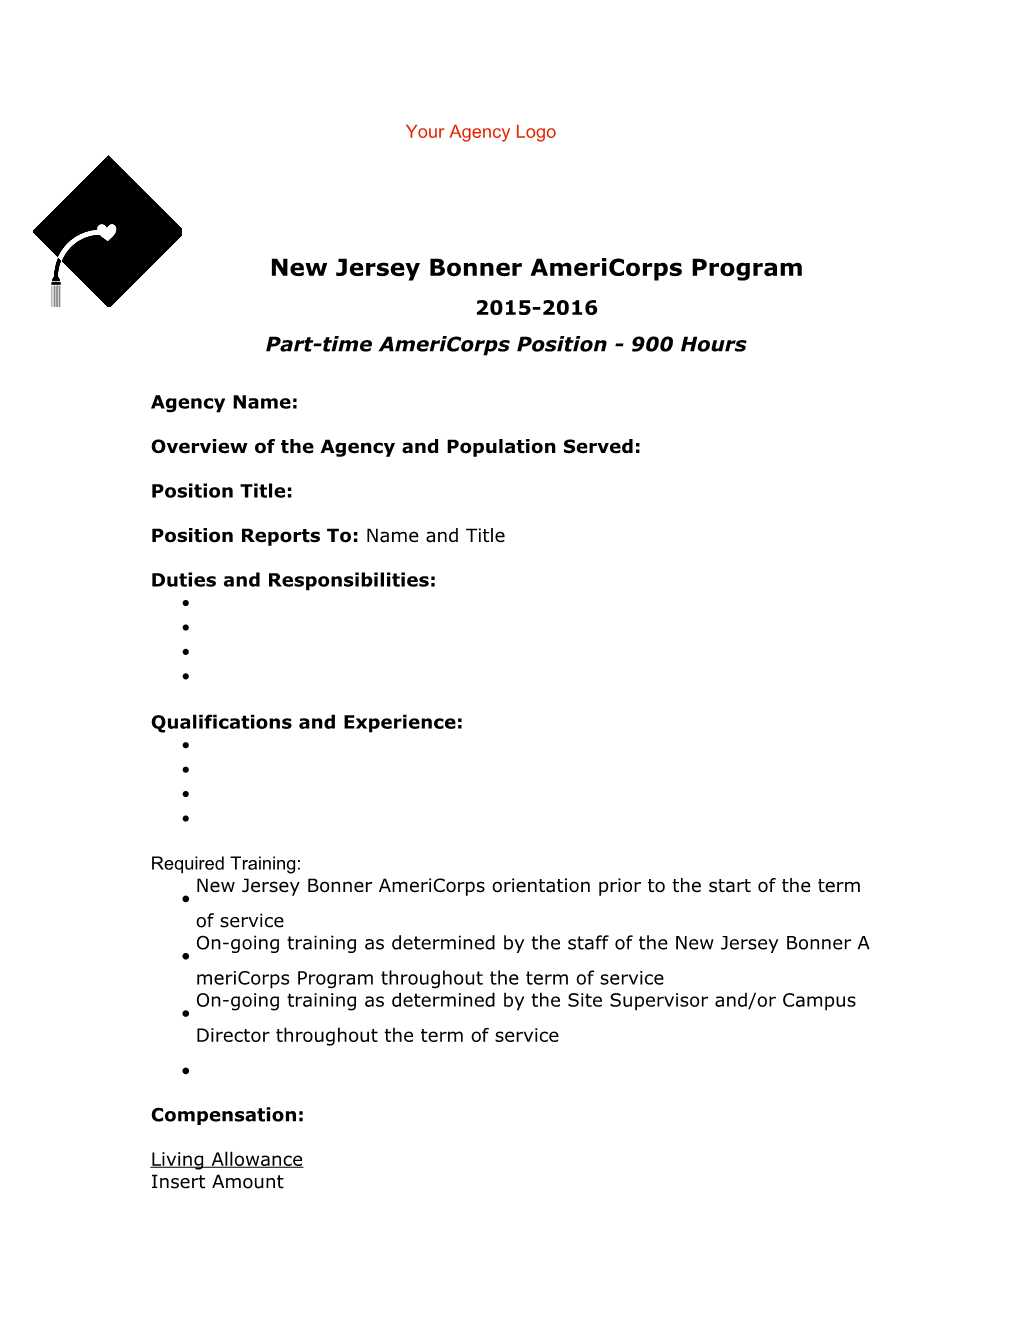 New Jersey Bonner Americorps Program